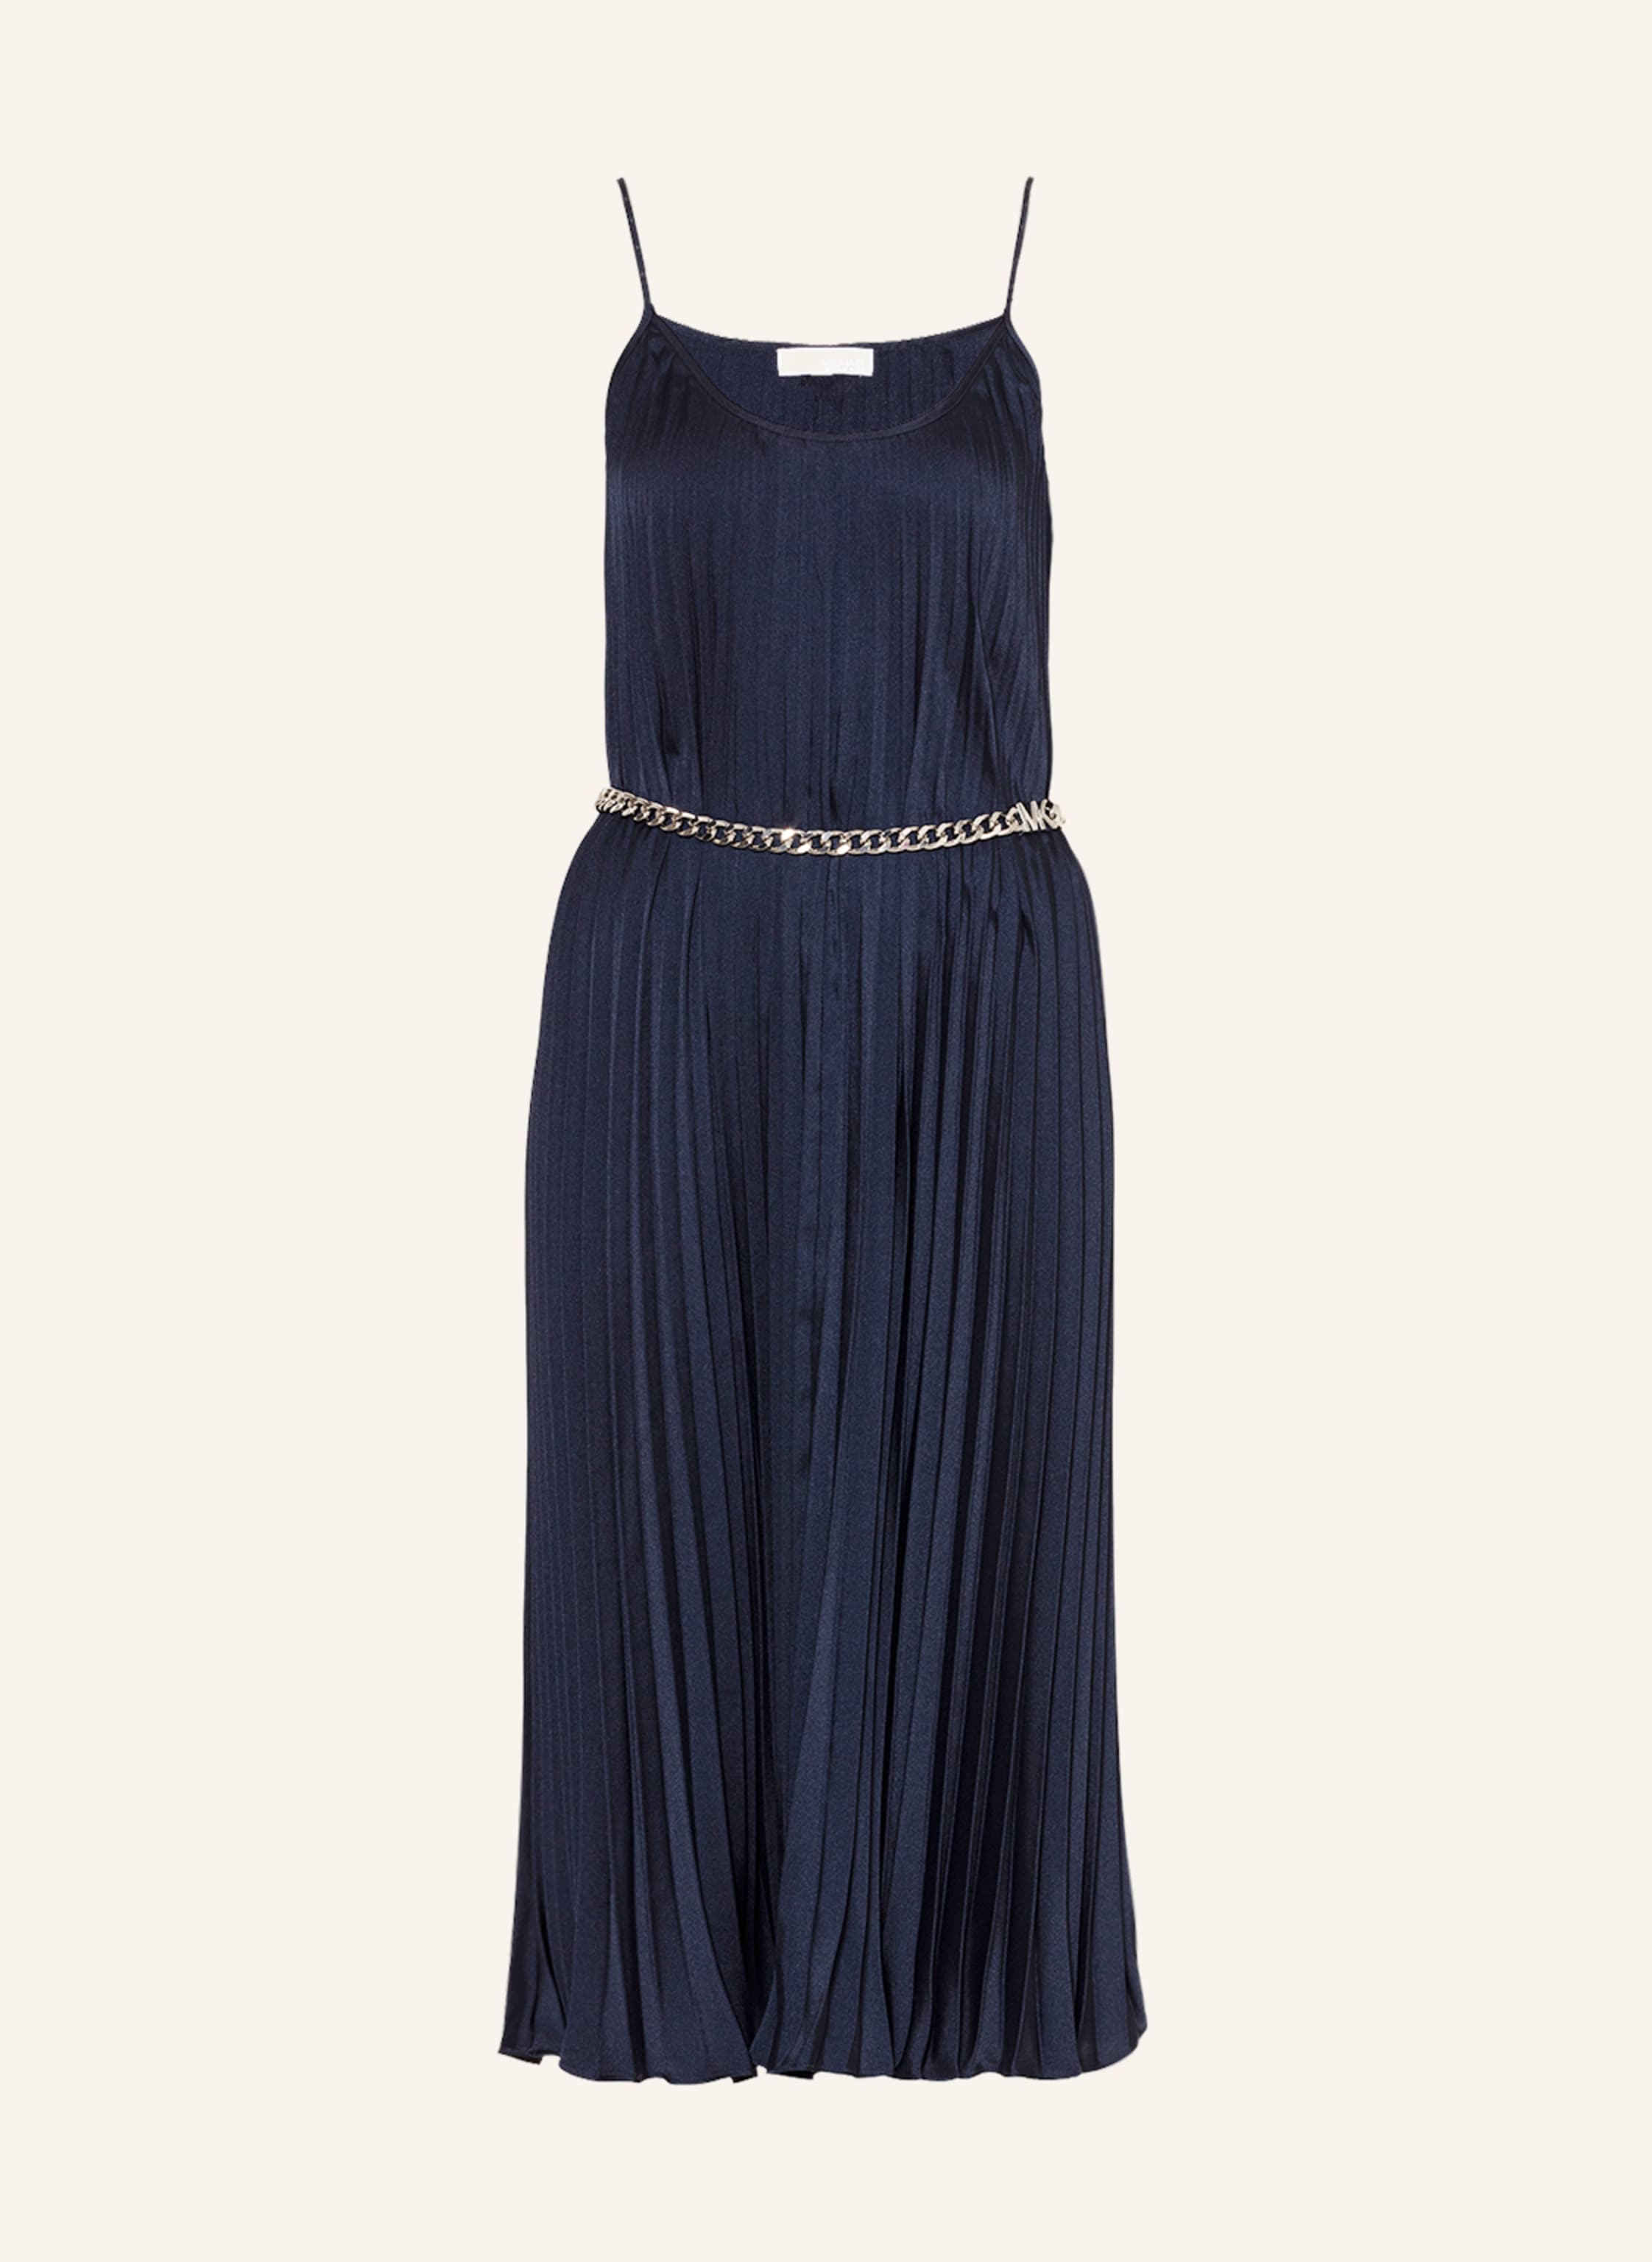 MSRP 110 Michael Kors Womens Long Sleeve Cocktail Dress Black Size Small  NWT  eBay